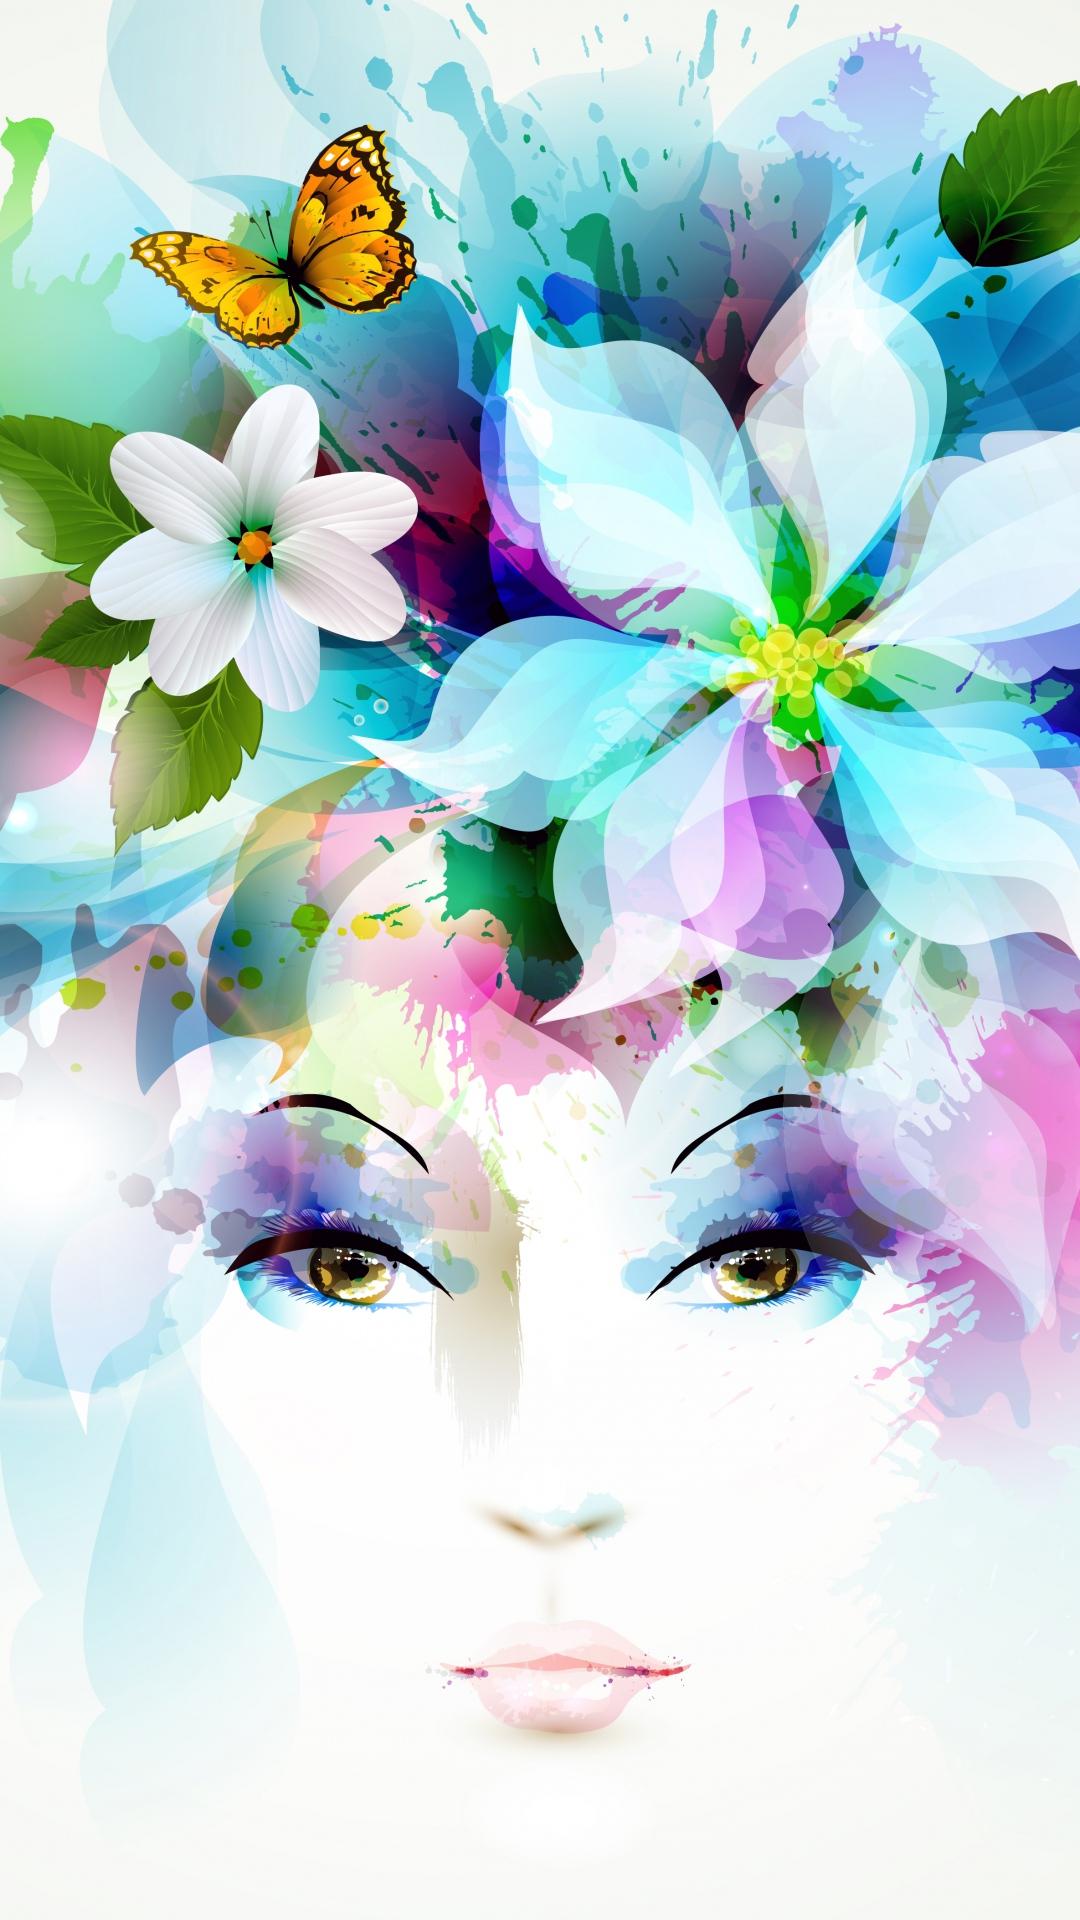 Art Girl Eyes Flowers Petals Butterfly Leaves Spray iPhone 8